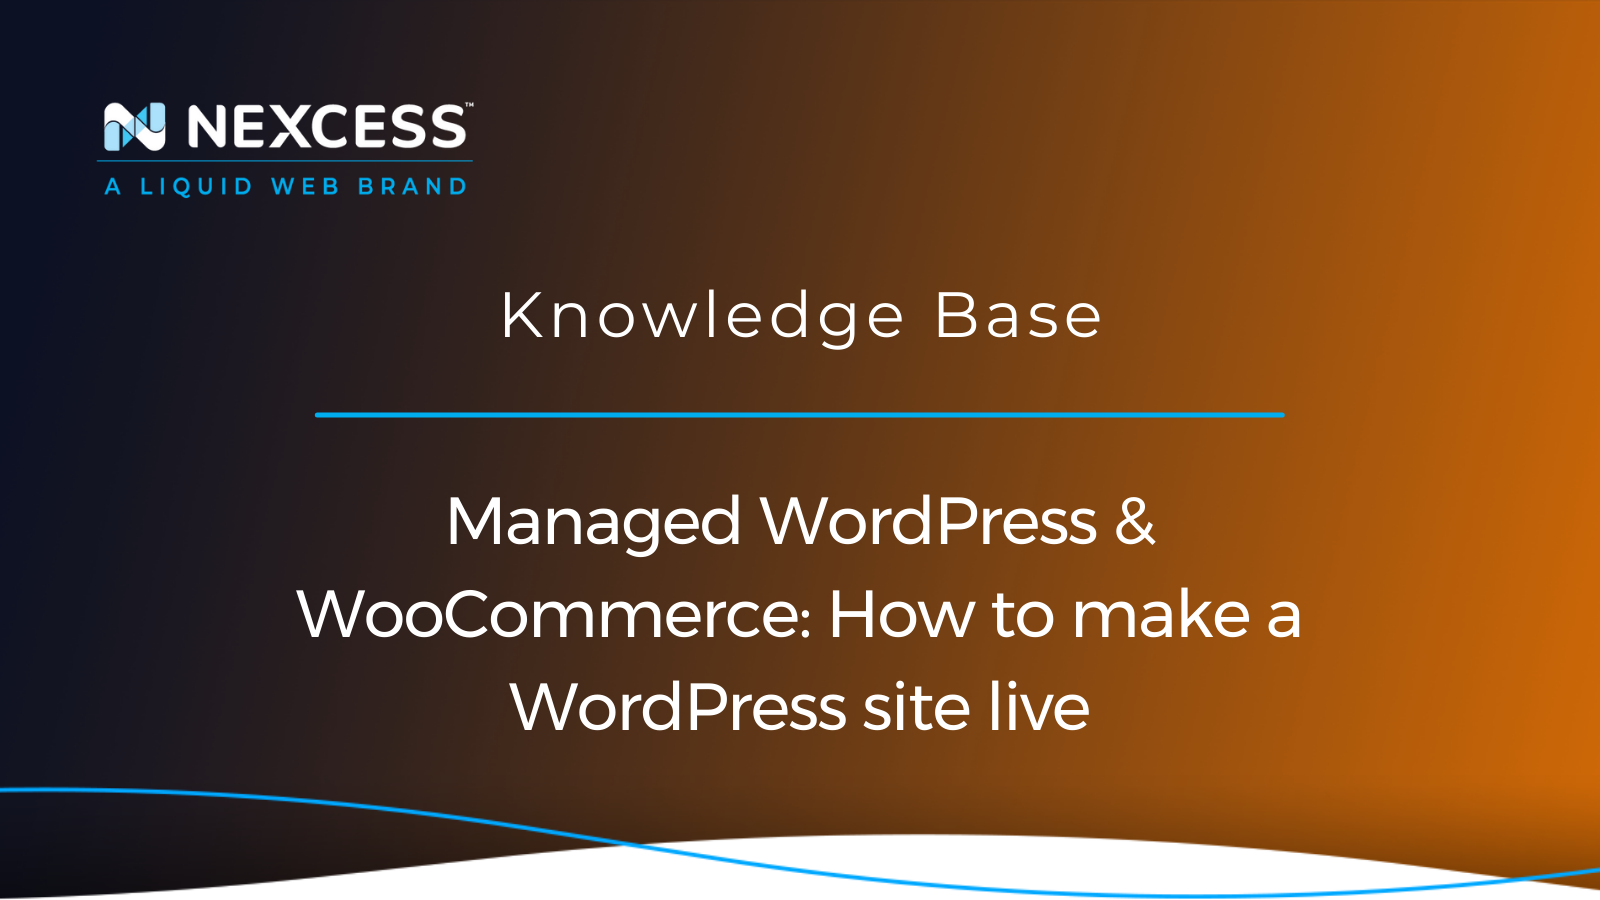 Managed WordPress & WooCommerce: How to make a WordPress site live